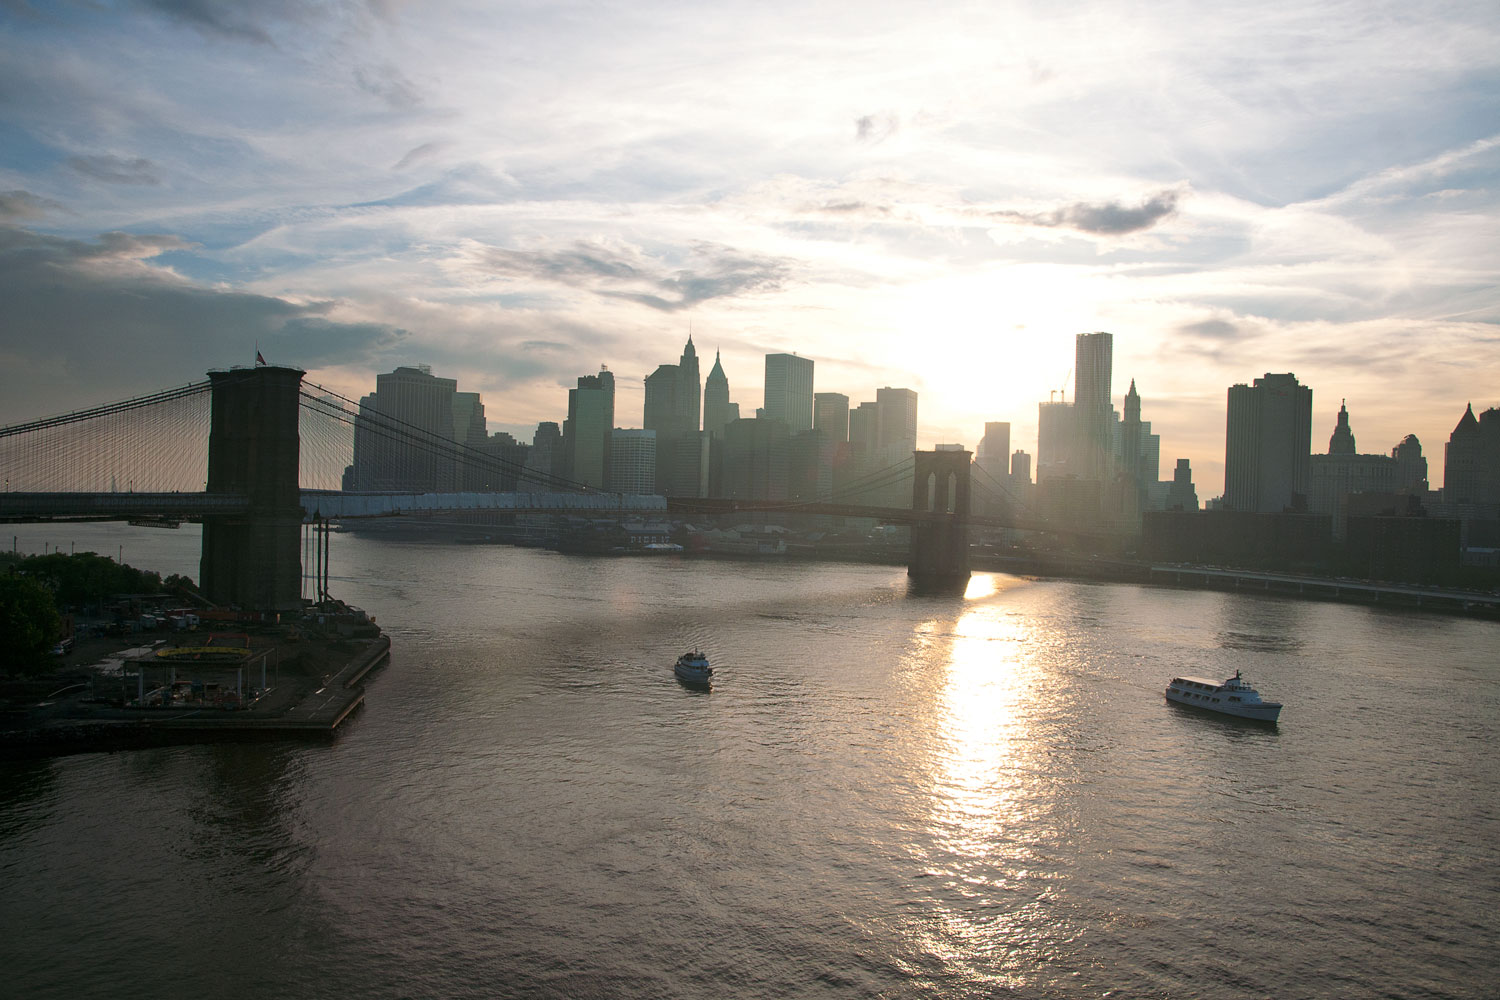 View of Lower Manhattan from the Manhattan Bridge, Brooklyn, May 2011.